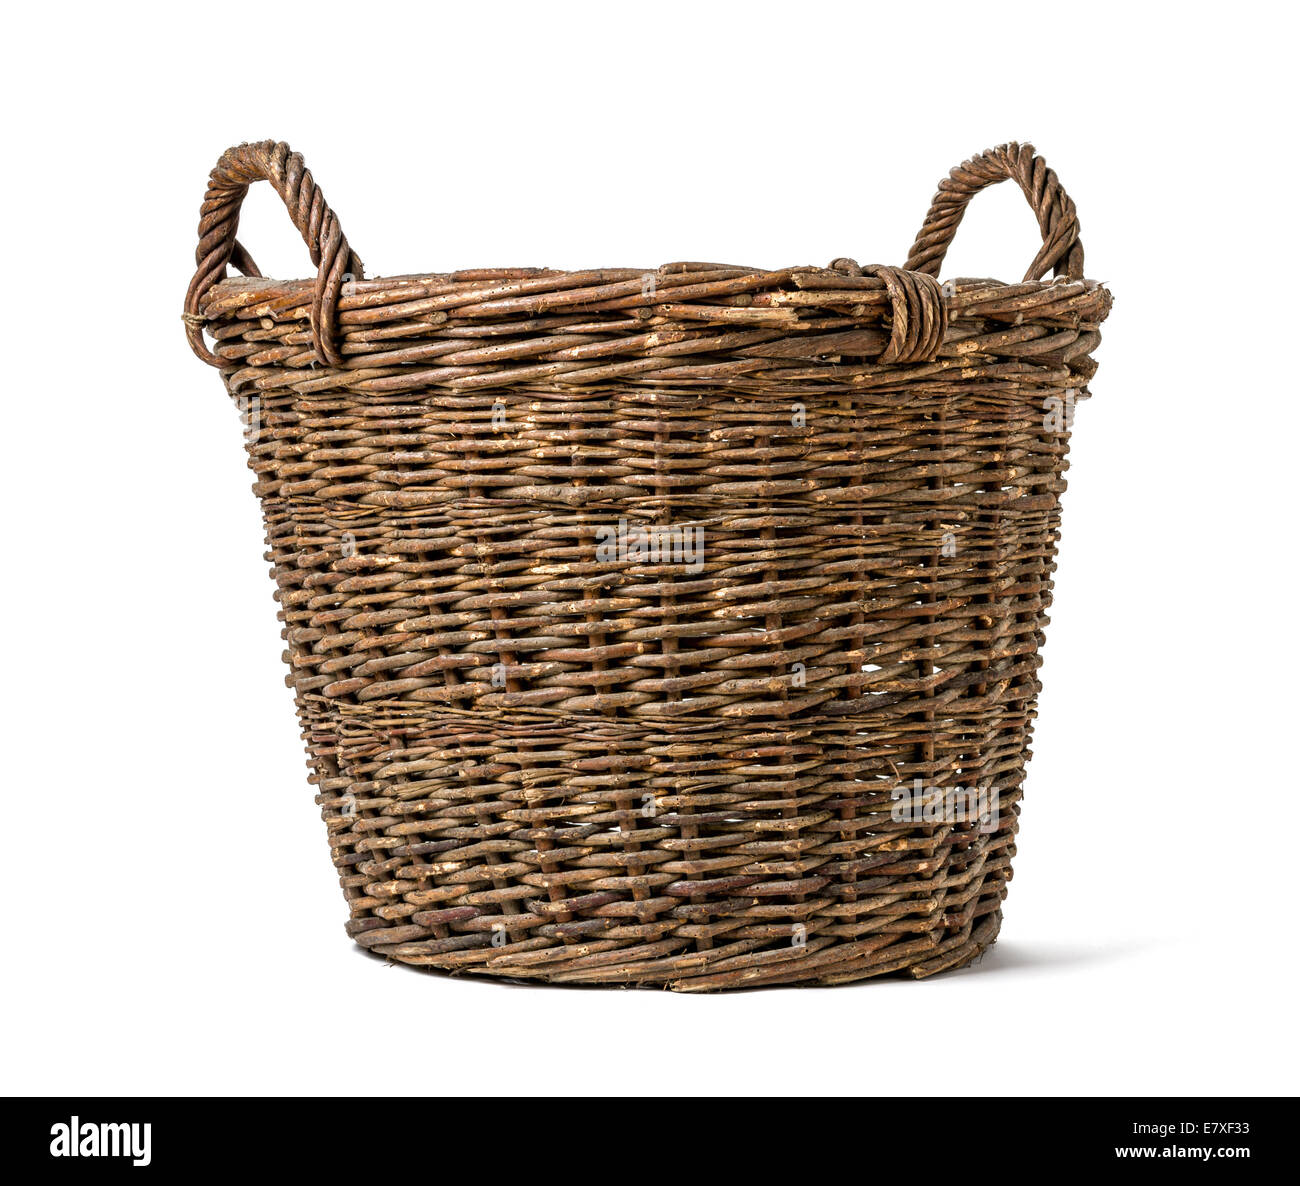 Empty wicker basket on a white background Stock Photo